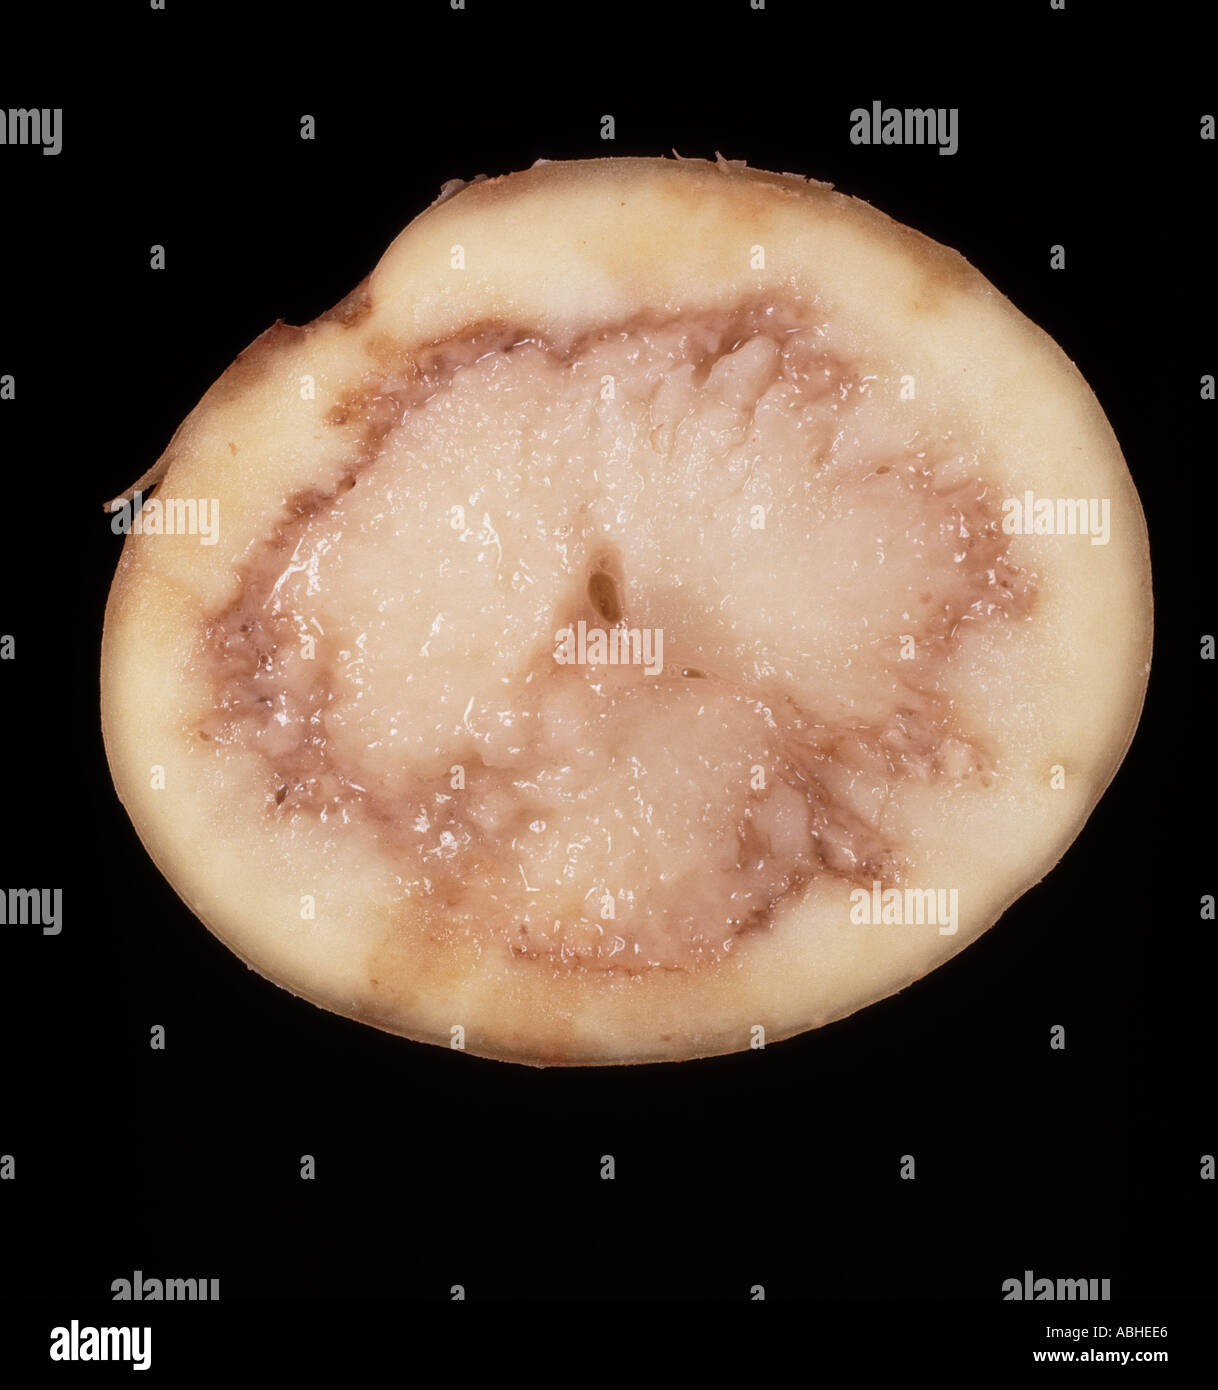 Cross section of potato tuber showing symptons of ring rot Corynebacterium sepedonicum Stock Photo